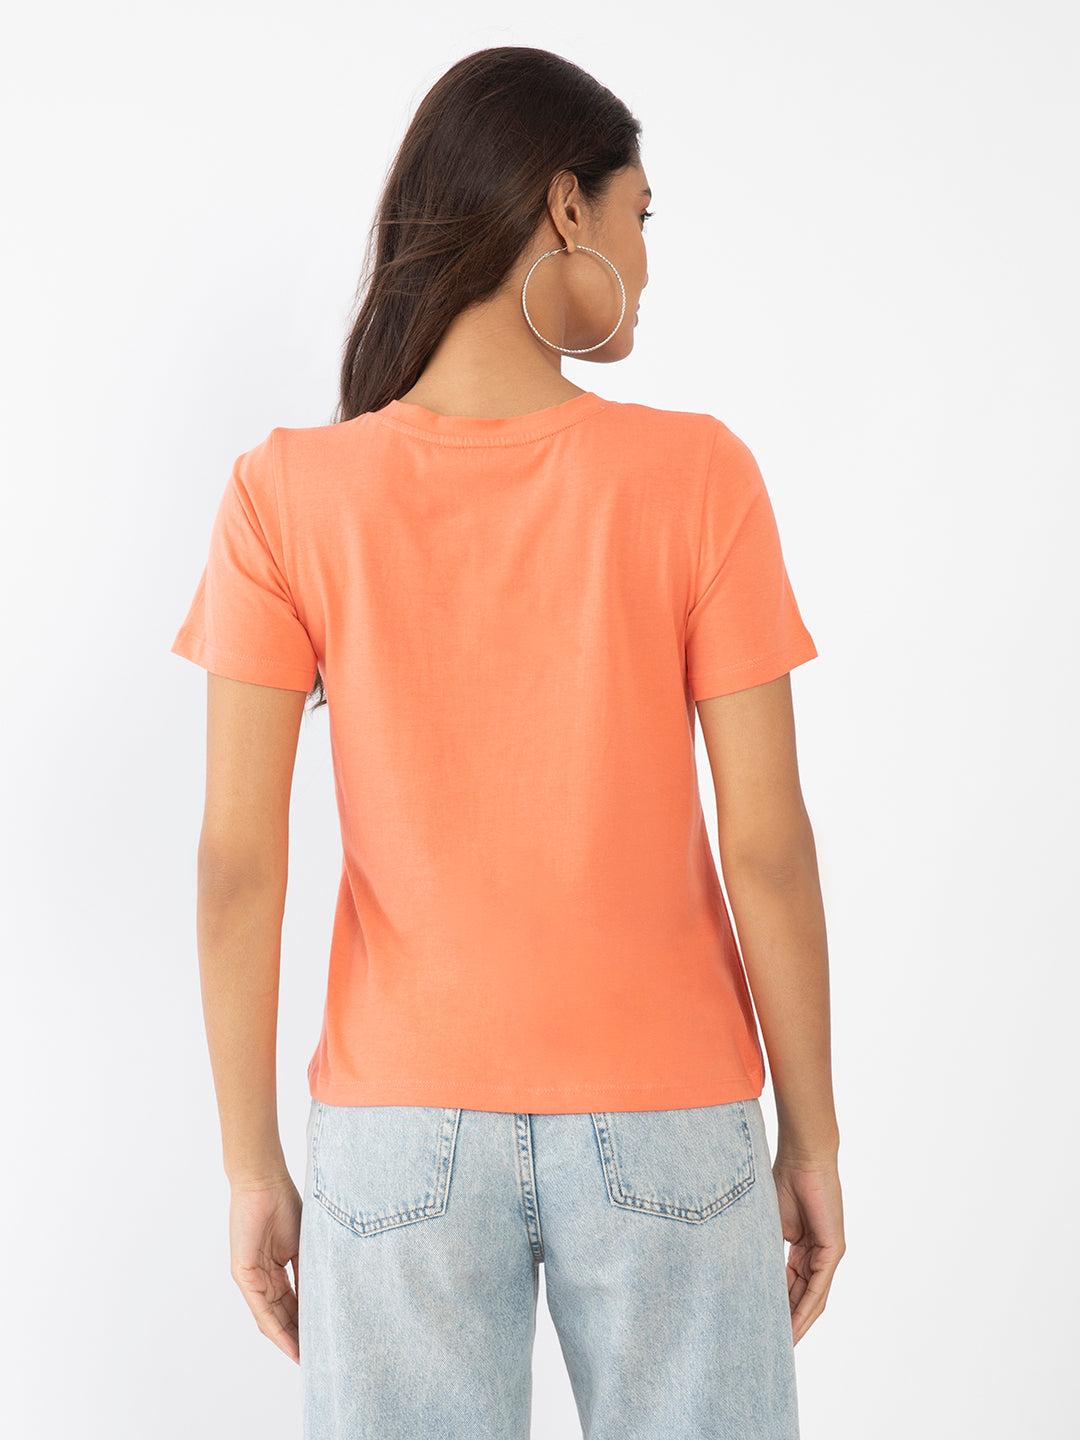 orange printed t-shirt for women